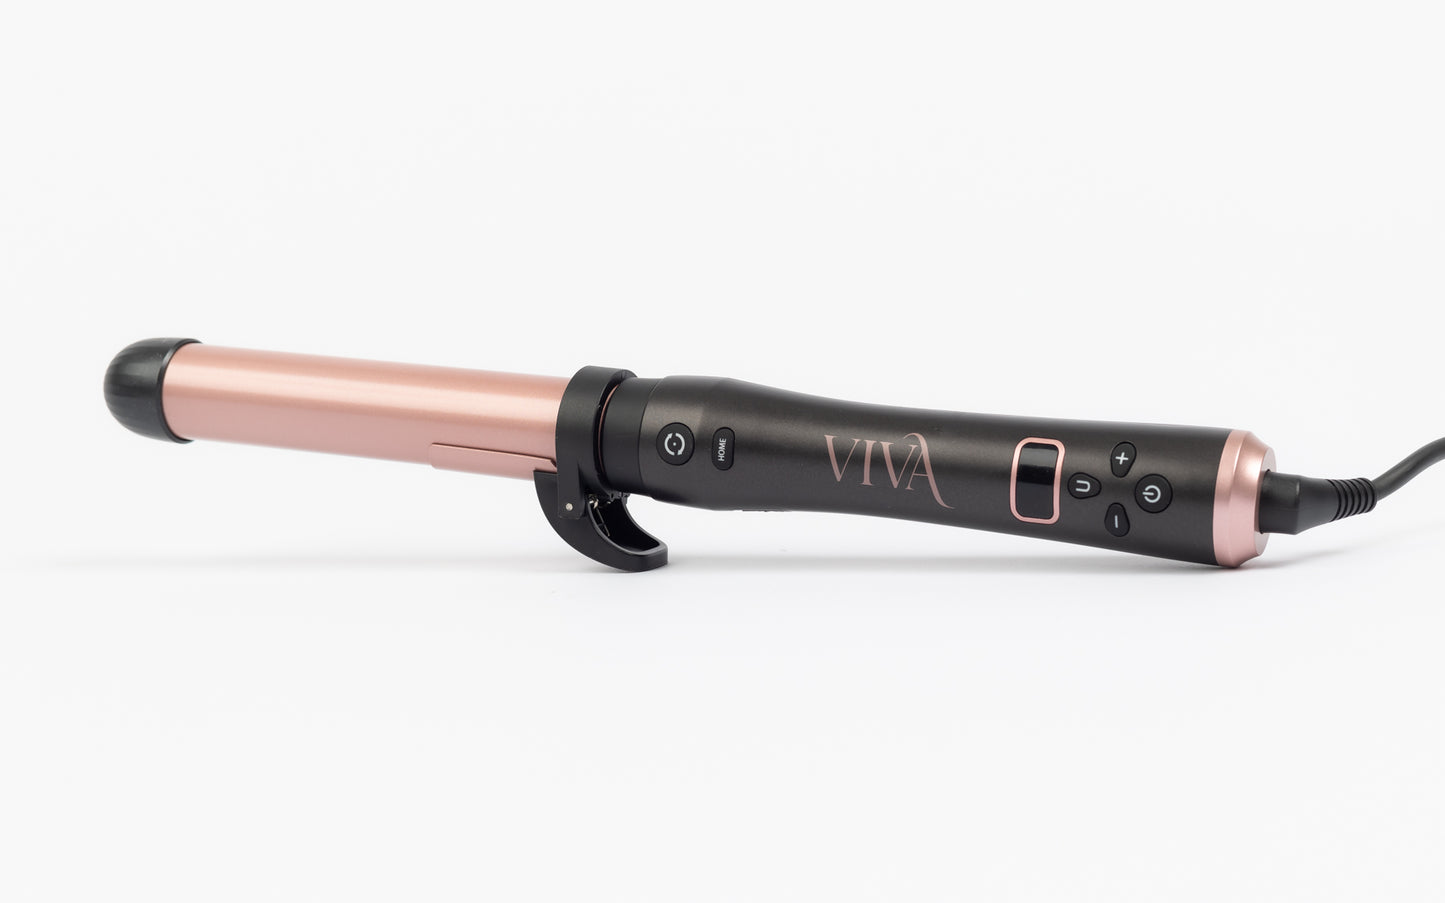 Close-up of VIVA 3 in 1 hair curler showcasing adjustable temperature settings on digital LCD screen.